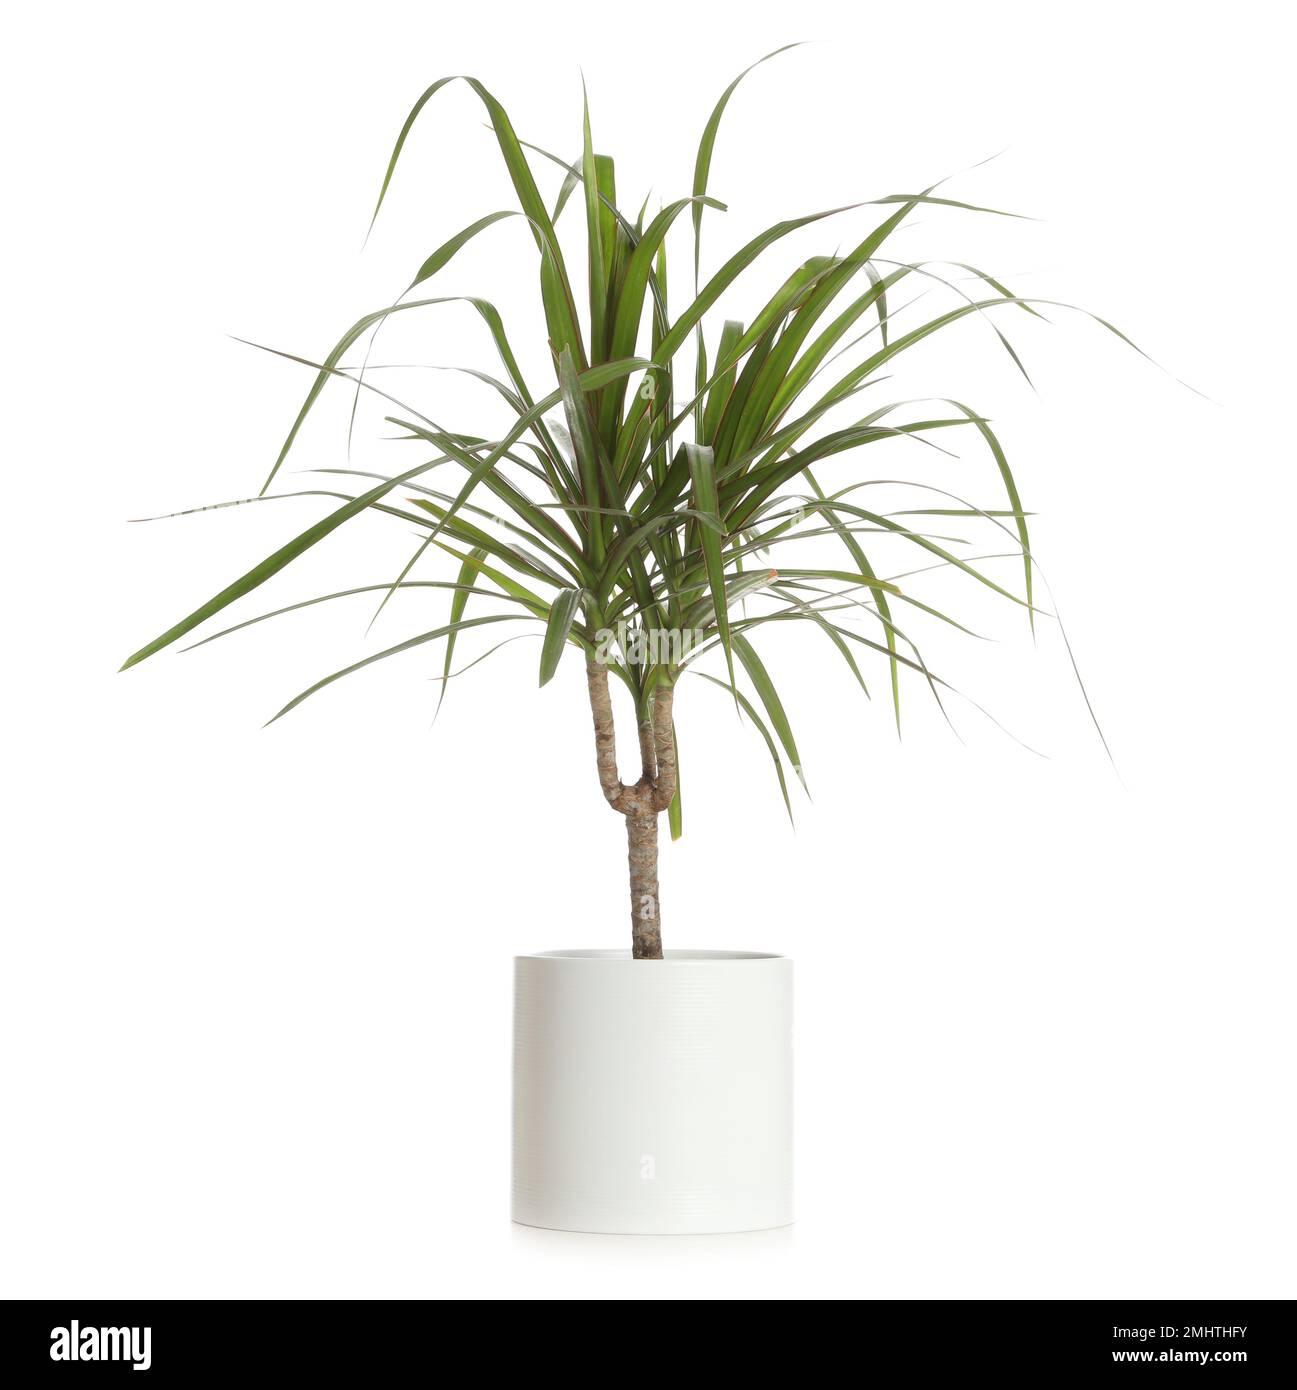 Pot with Dracaena plant isolated on white. Home decor Stock Photo